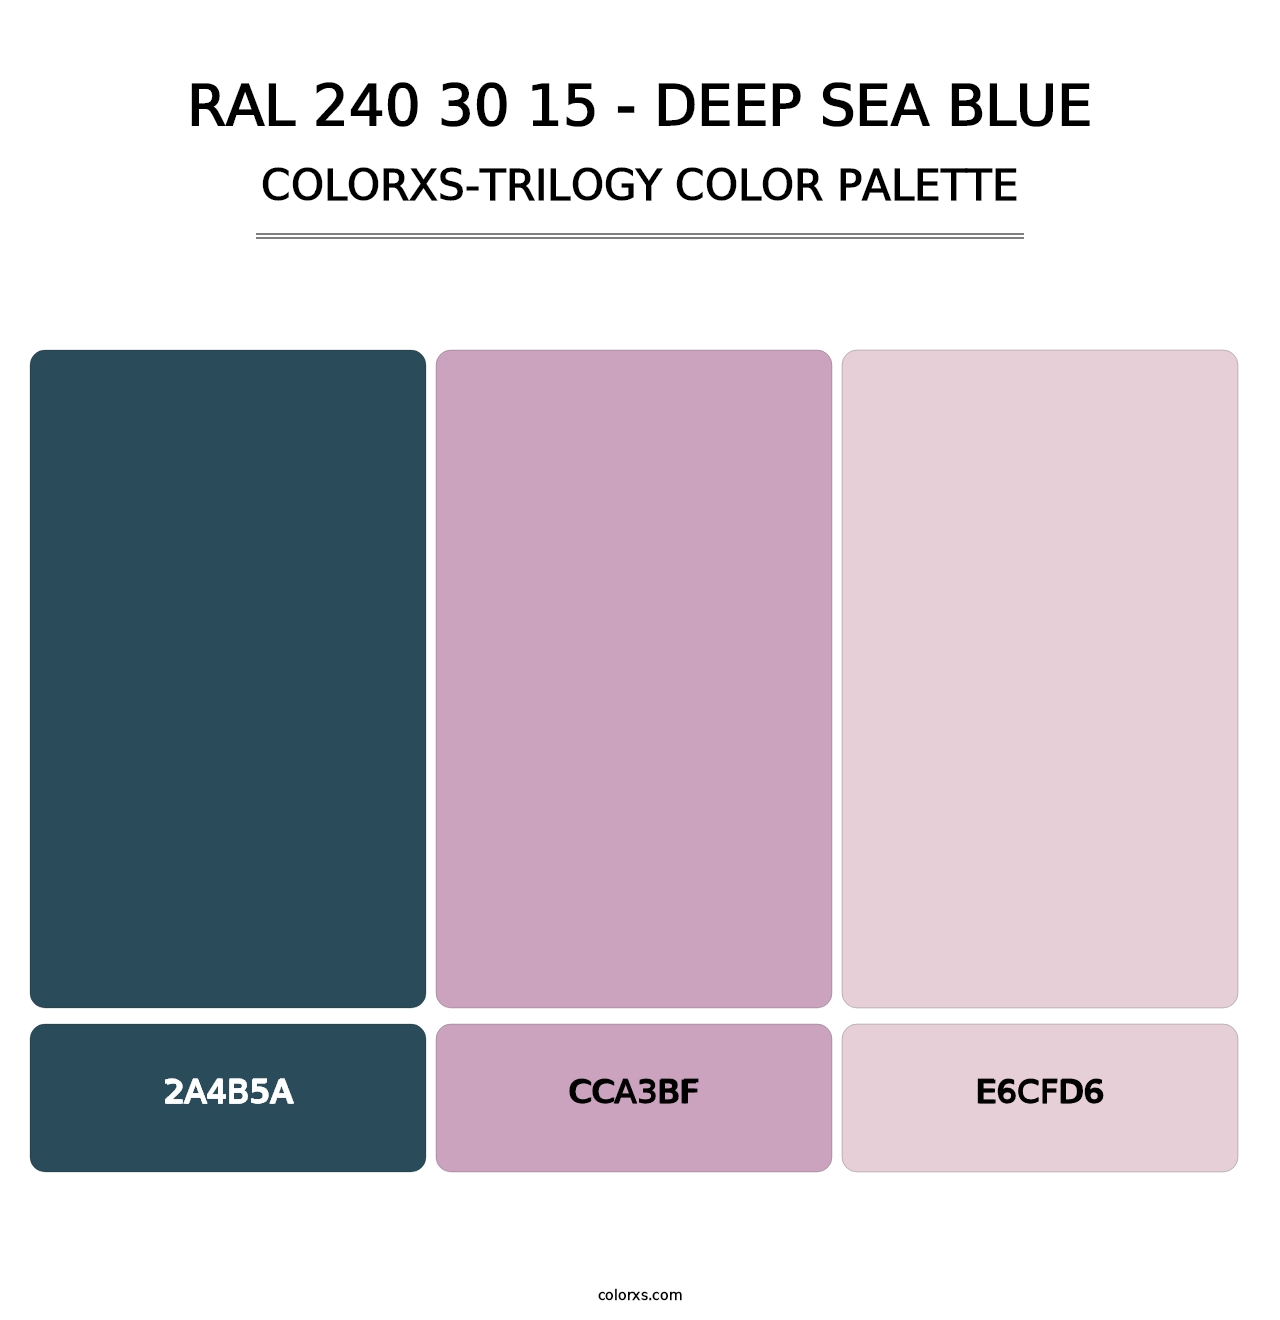 RAL 240 30 15 - Deep Sea Blue - Colorxs Trilogy Palette